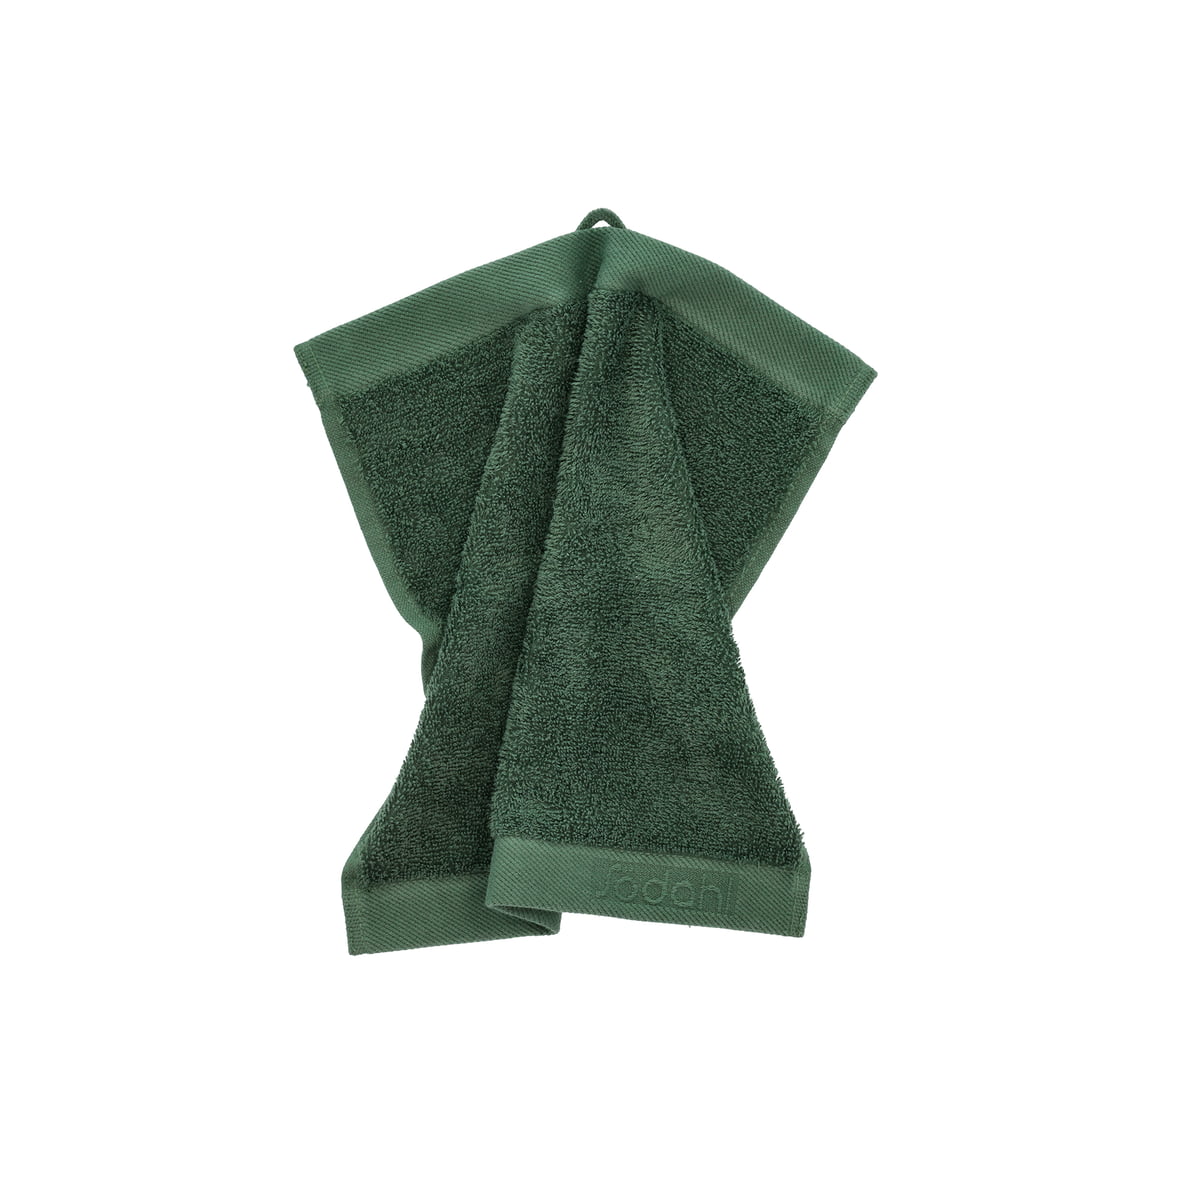 södahl - comfort gant de toilette, 30 x 30 cm, pine green